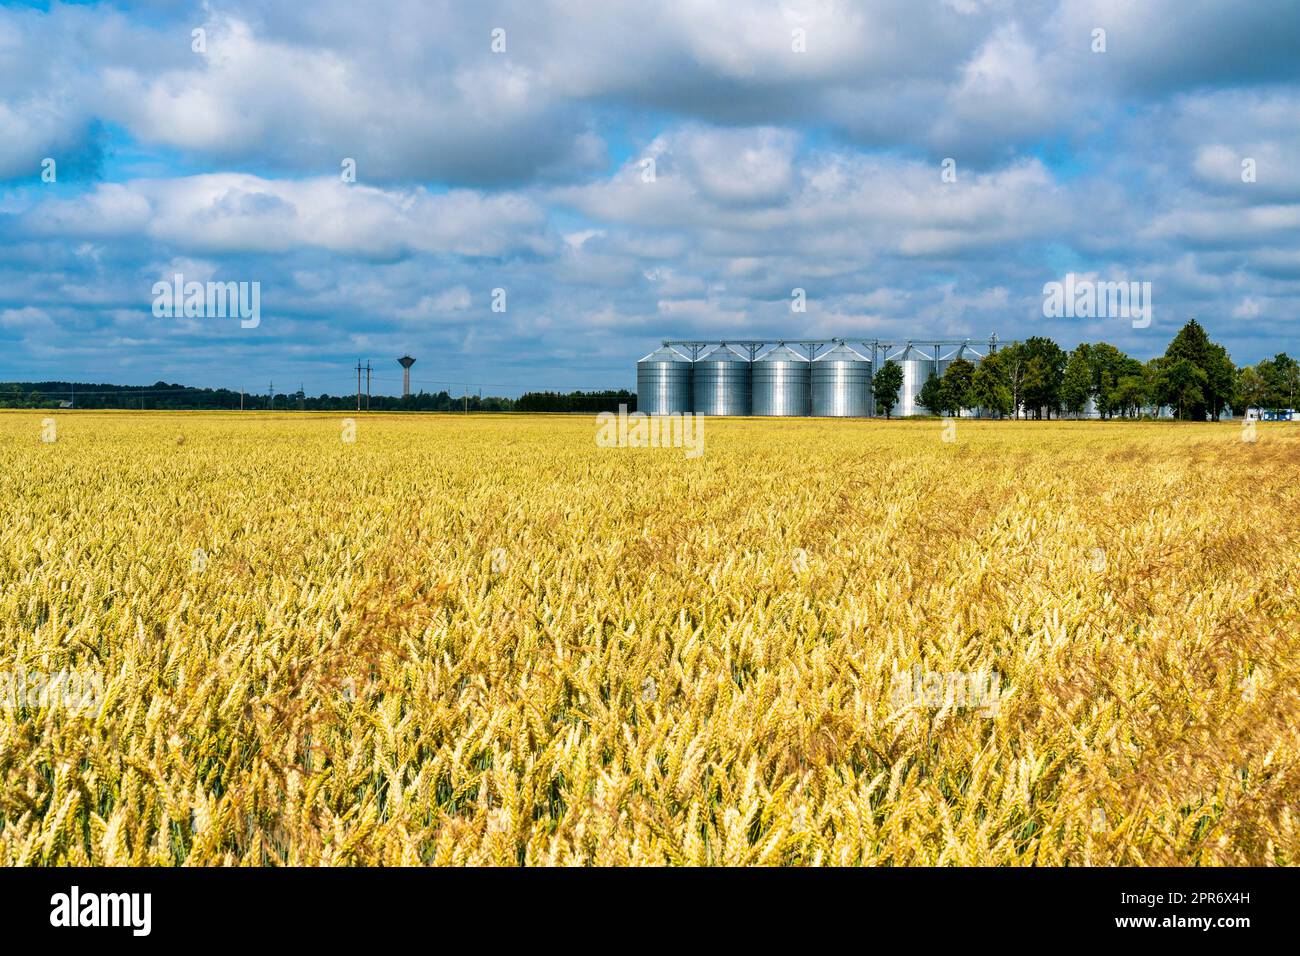 Grain storage silos system, behind a wheat field Stock Photo